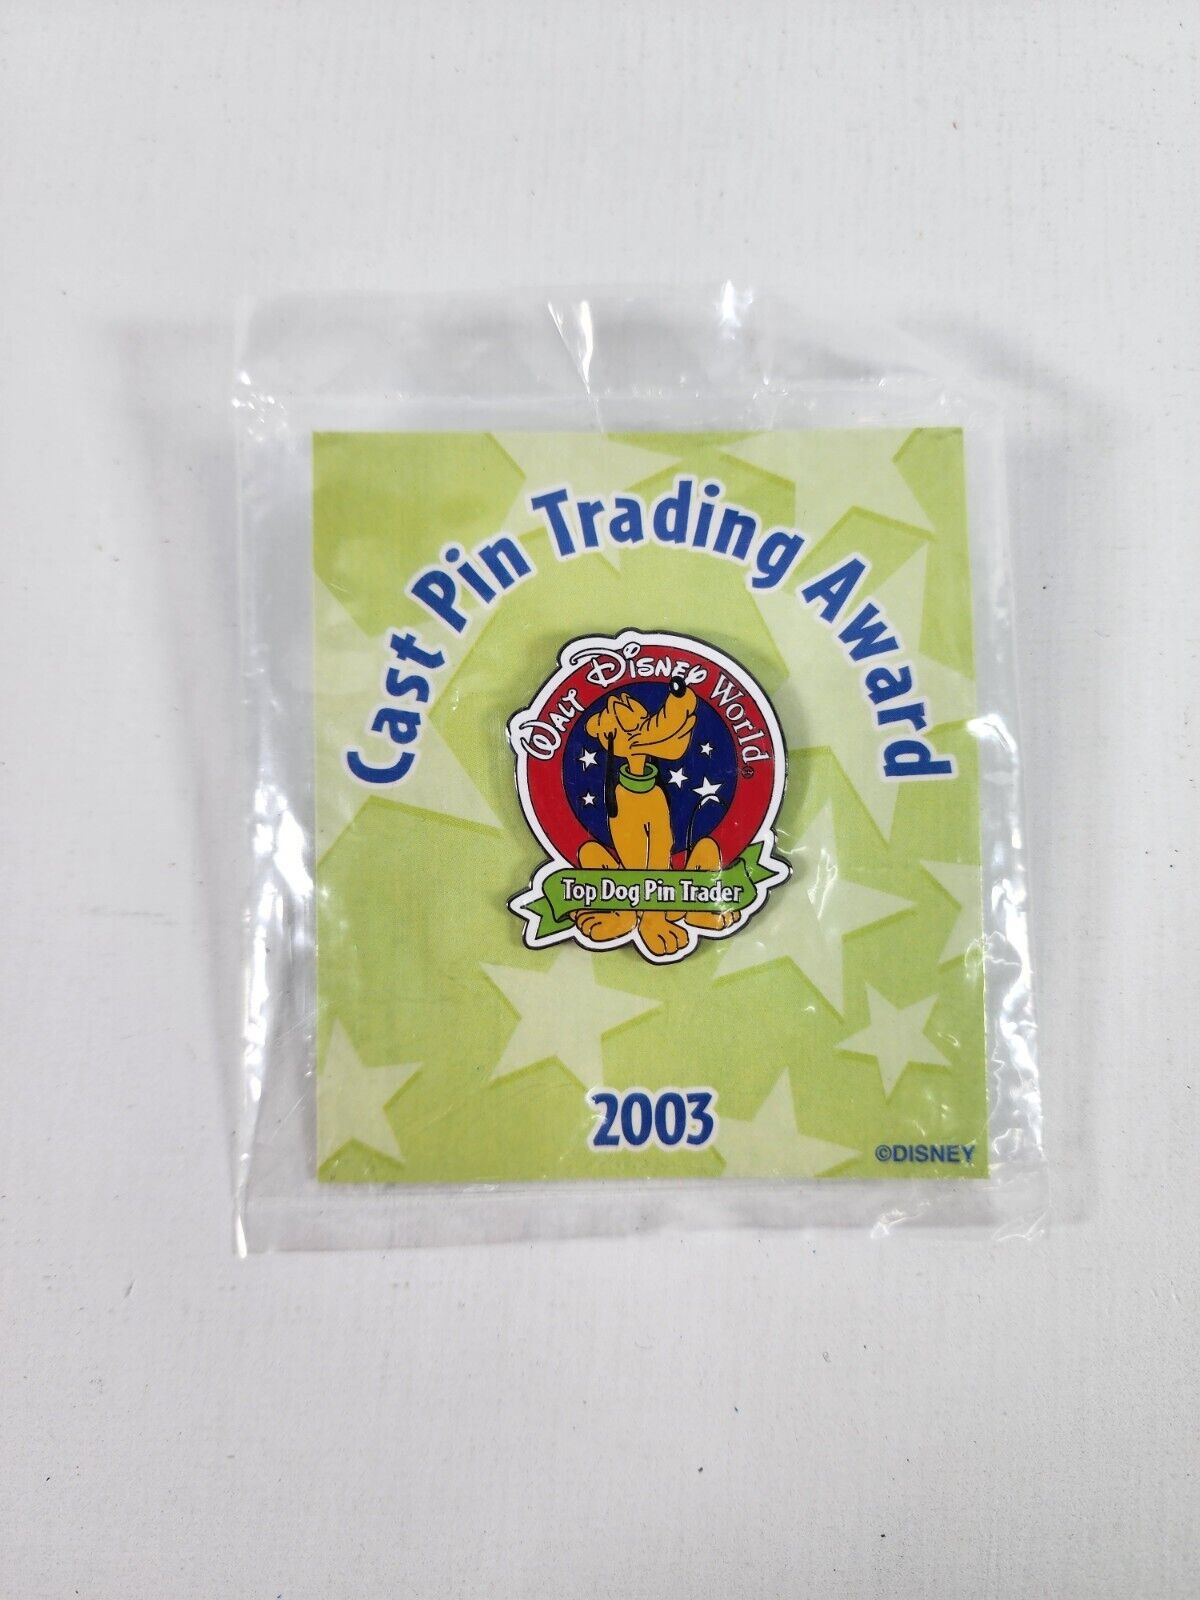 Walt Disney World - Cast Pin Trading Award 2003 - Top Dog Pin Trader Pluto Pin 